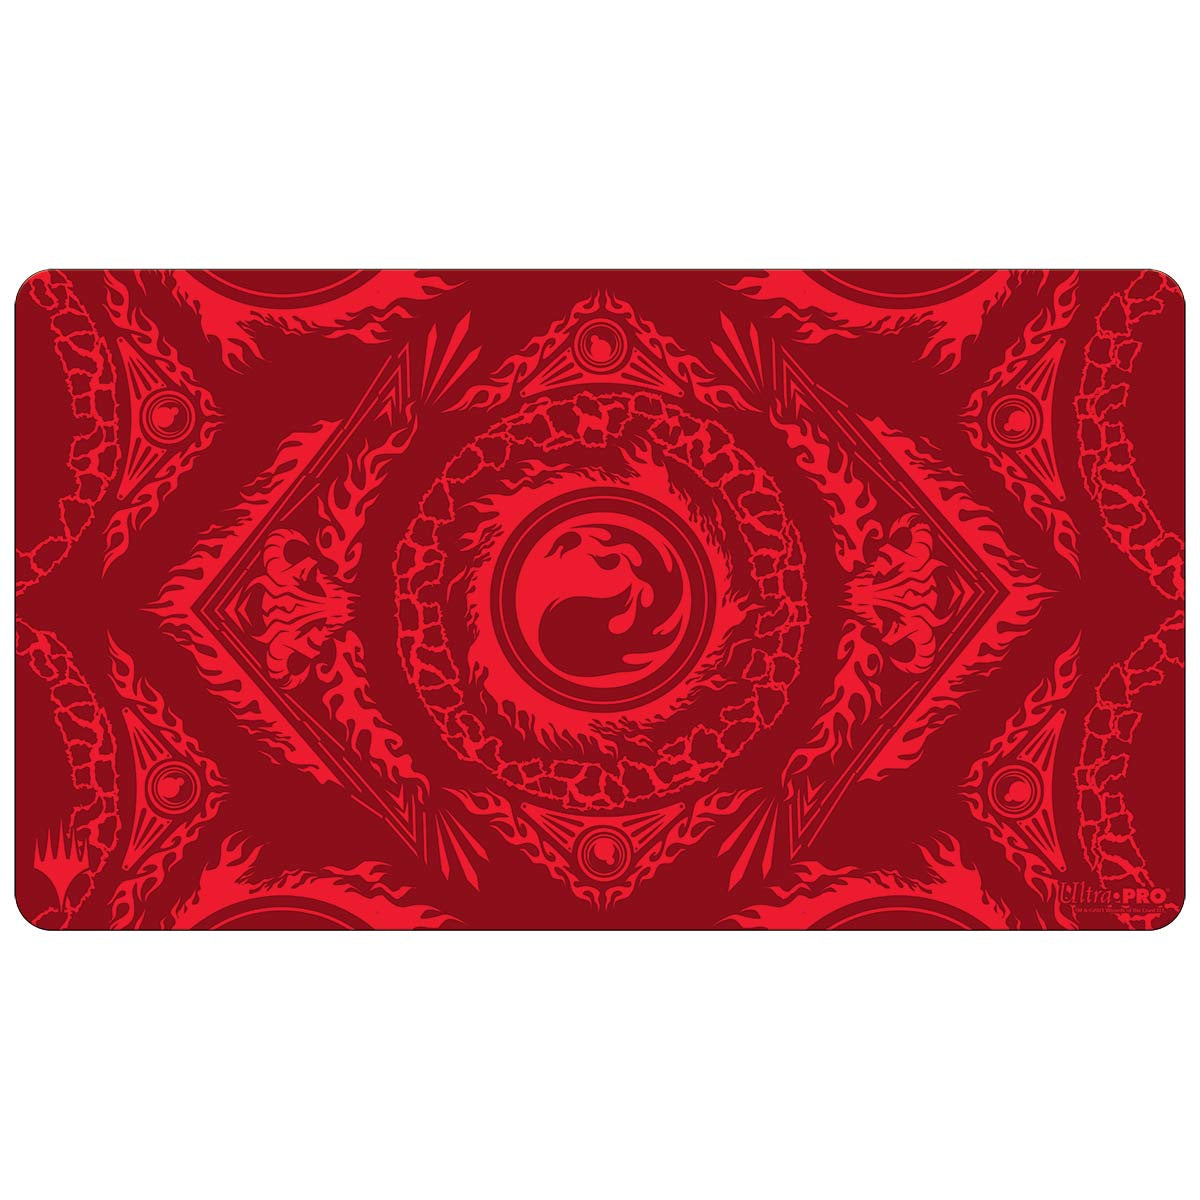 Ultra Pro - MTG - Playmat - Mana 7 - Mountain (Red)